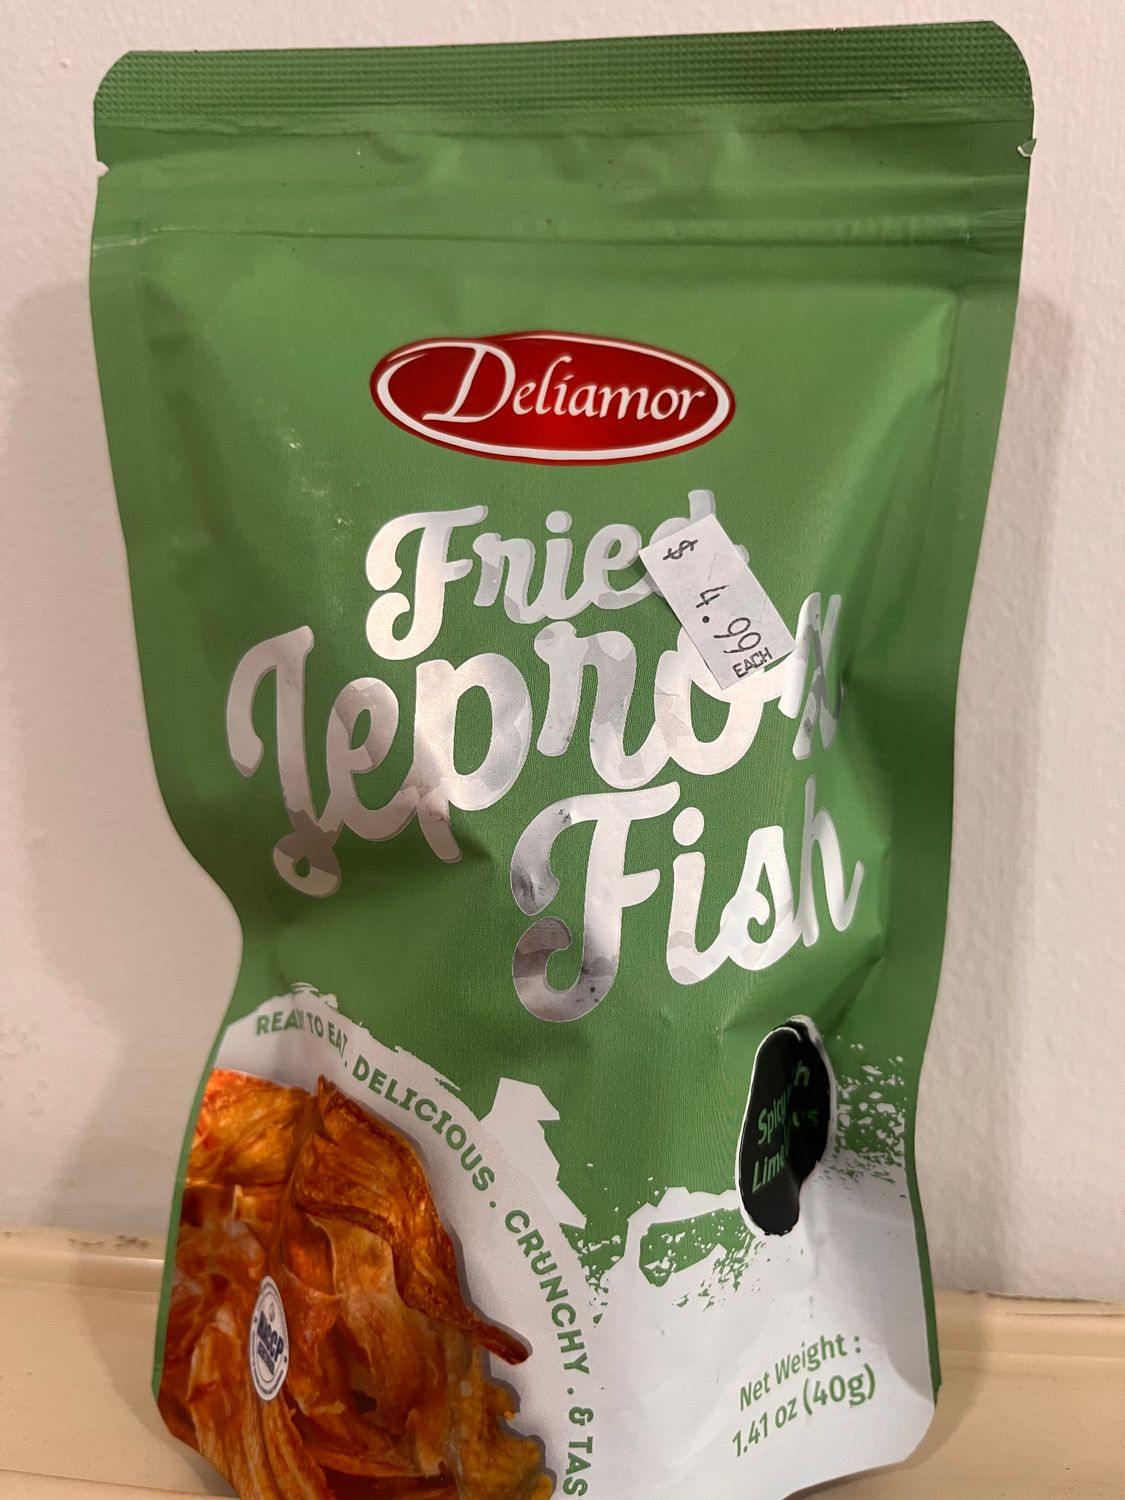 Deliamor Fried Jefrox